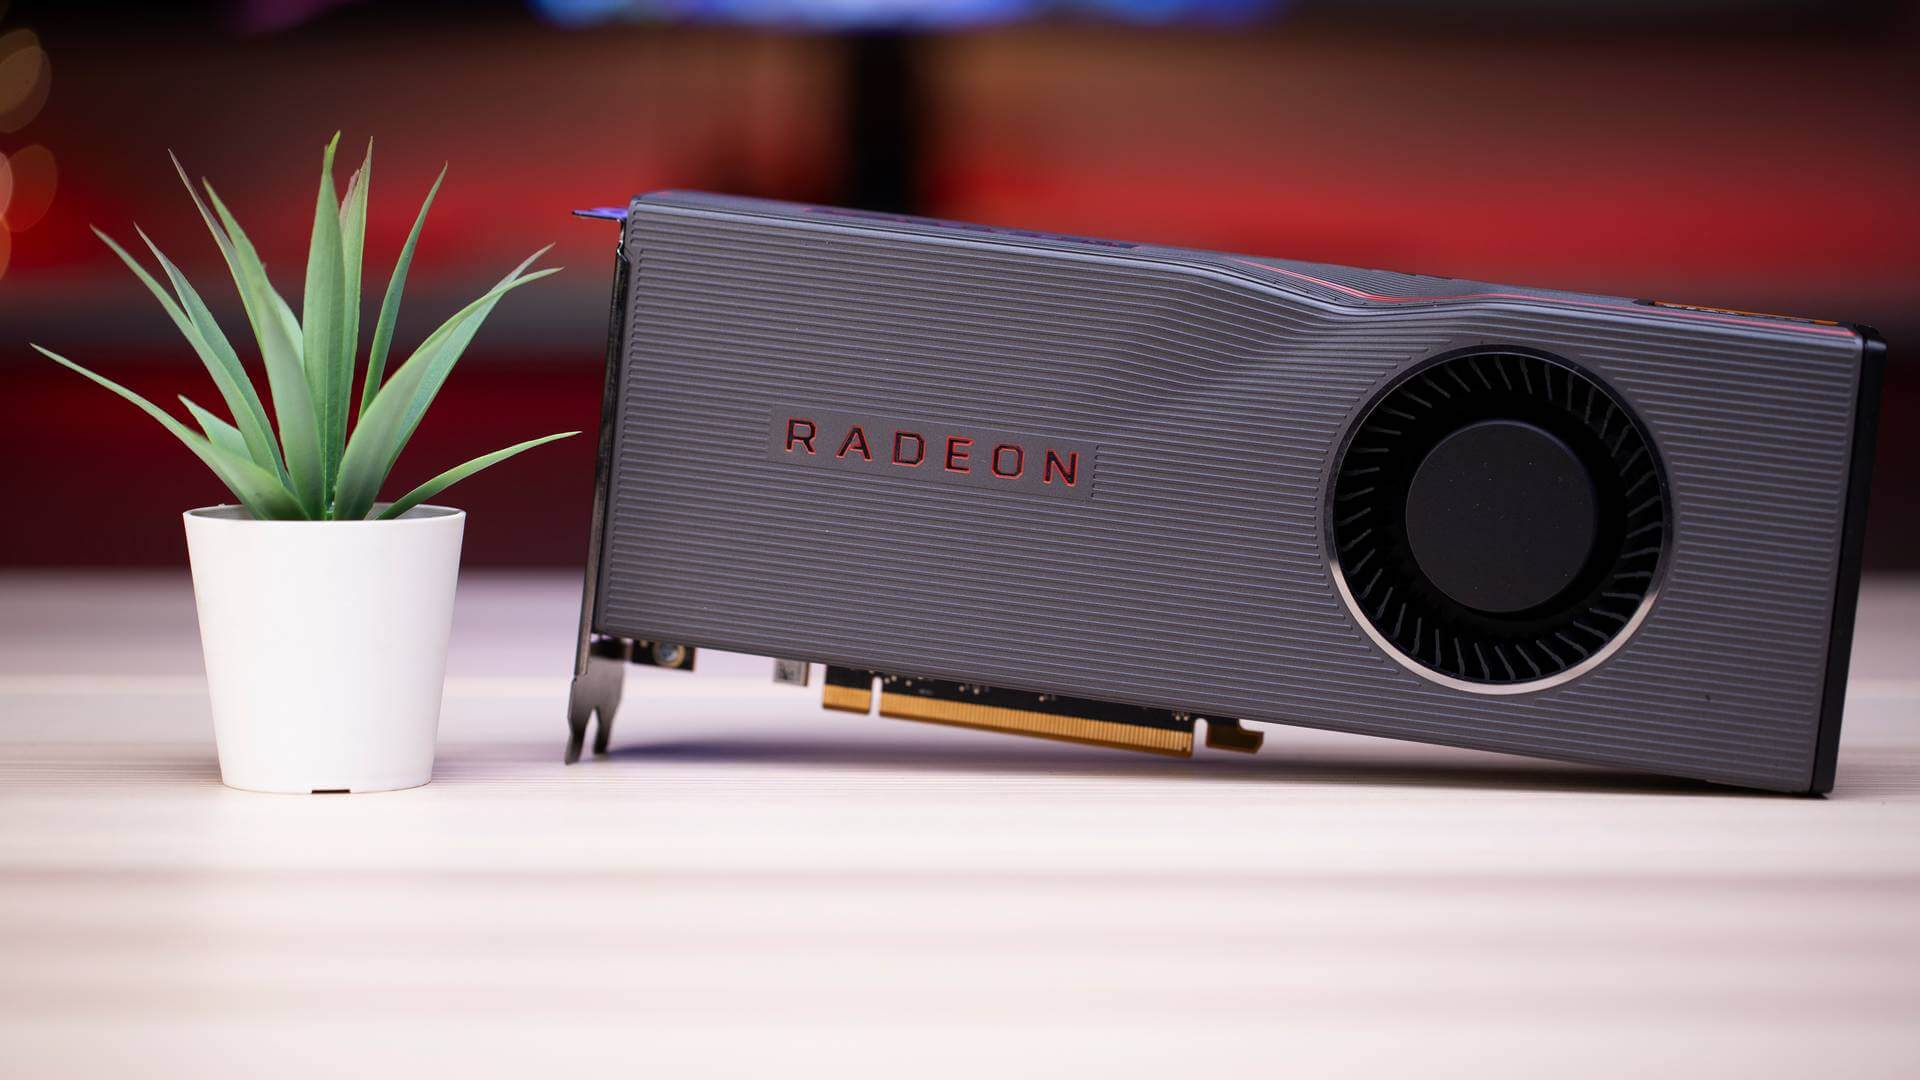  AMD Radeon RX 5700 & RX 5700 XT